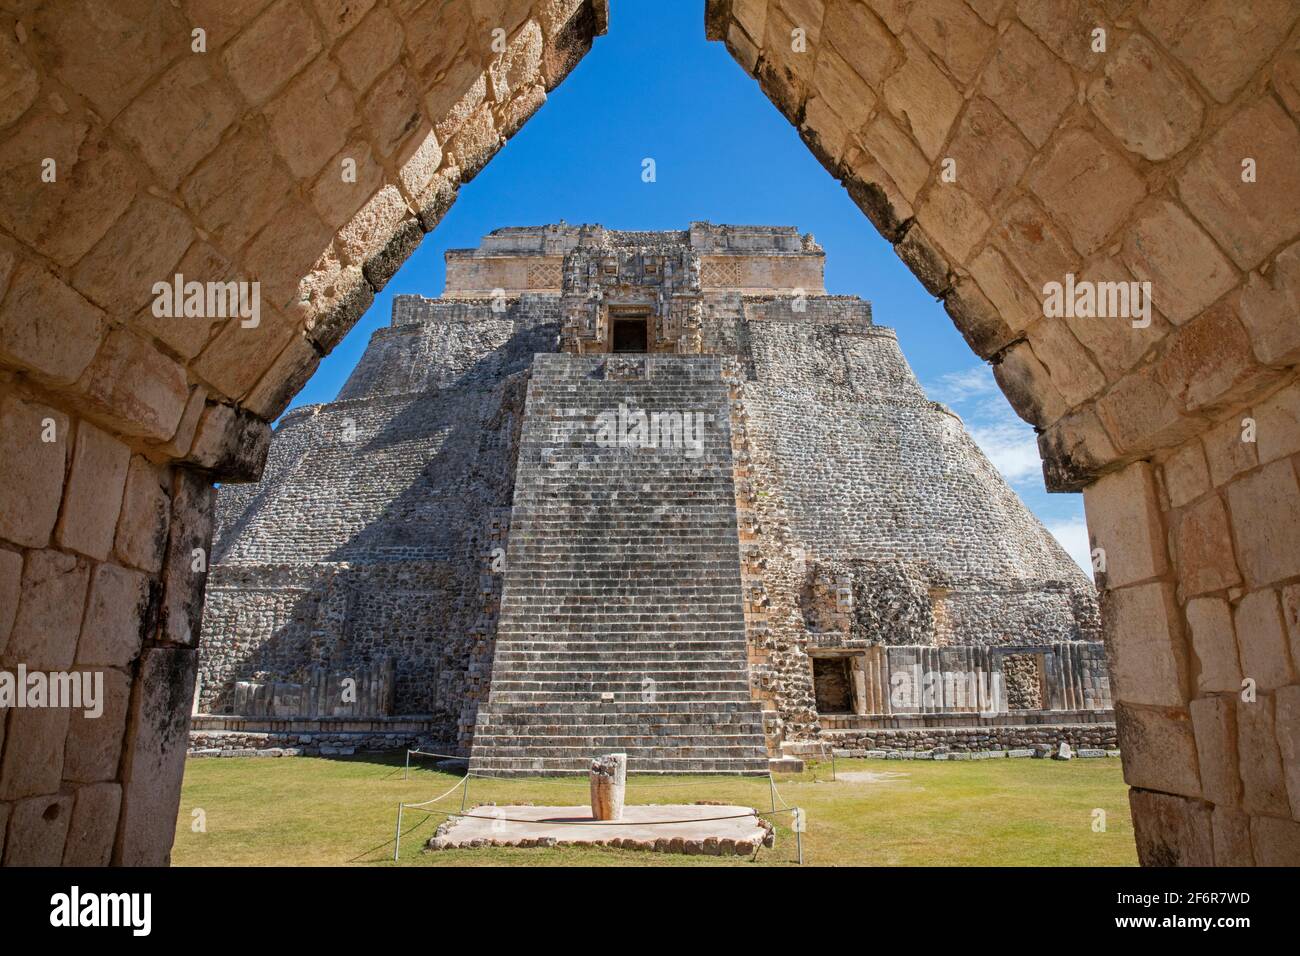 Pyramid of the Magician / Pirámide del adivino, Mesoamerican step pyramid in the ancient Mayan city Uxmal, Yucatán, Mexico Stock Photo